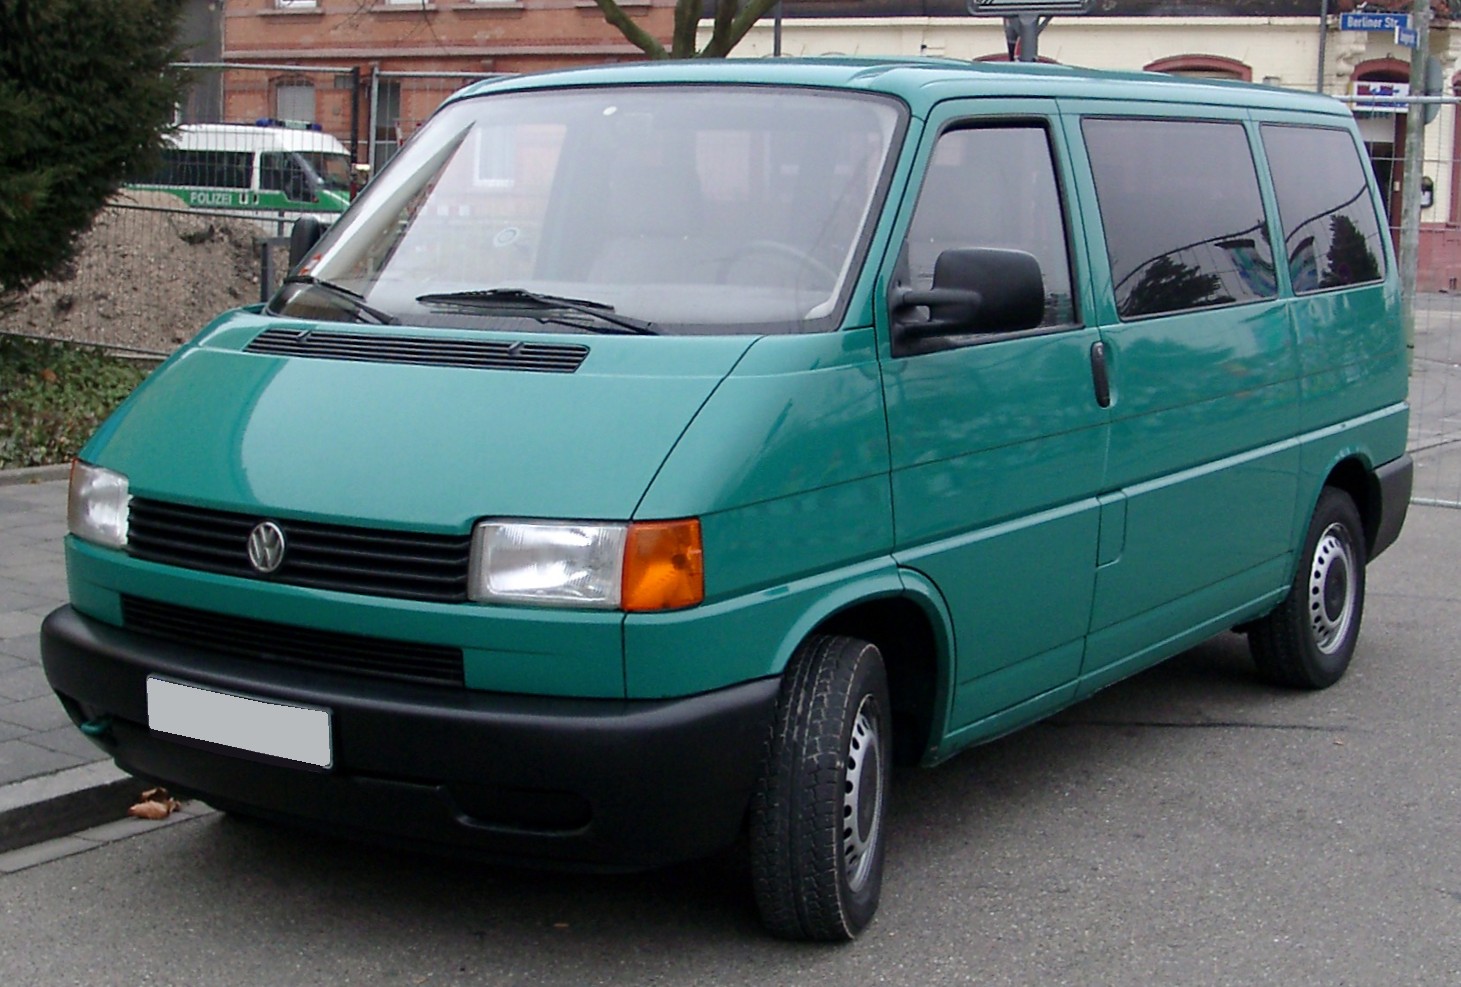 Volkswagen Eurovan (T4) - Wikipedia, den frie encyklopædi